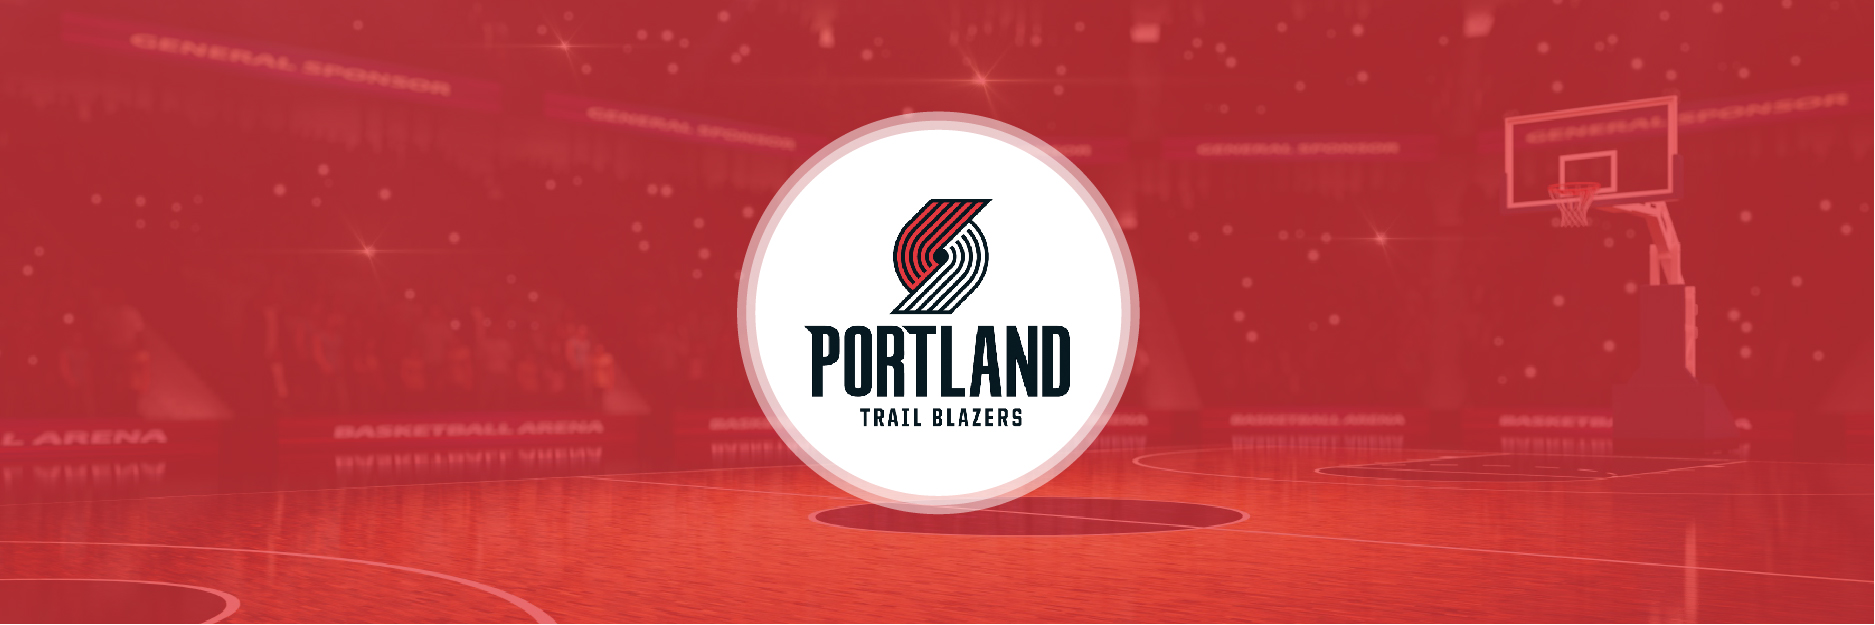 NBA Portland Trail Blazers 2020 Season Analysis